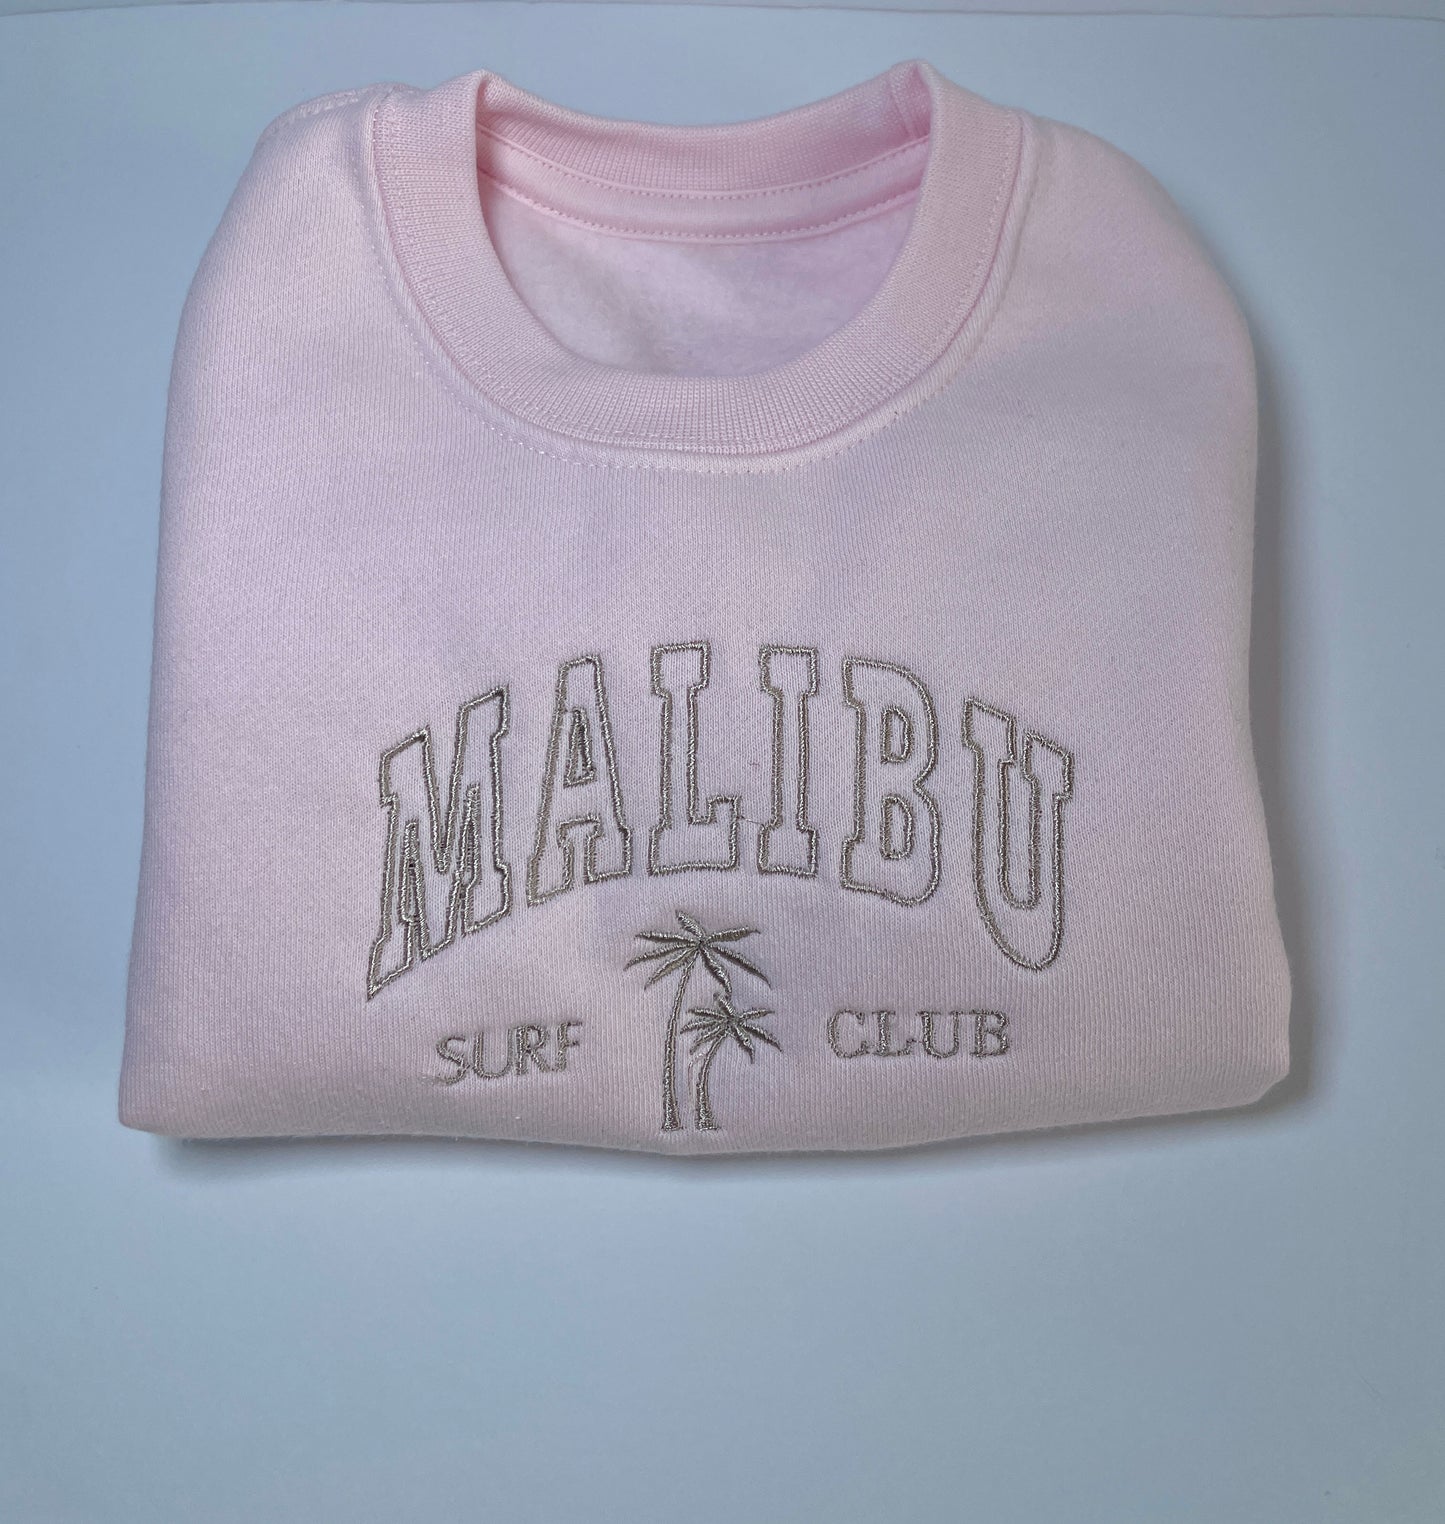 Malibu surf club sweatshirt